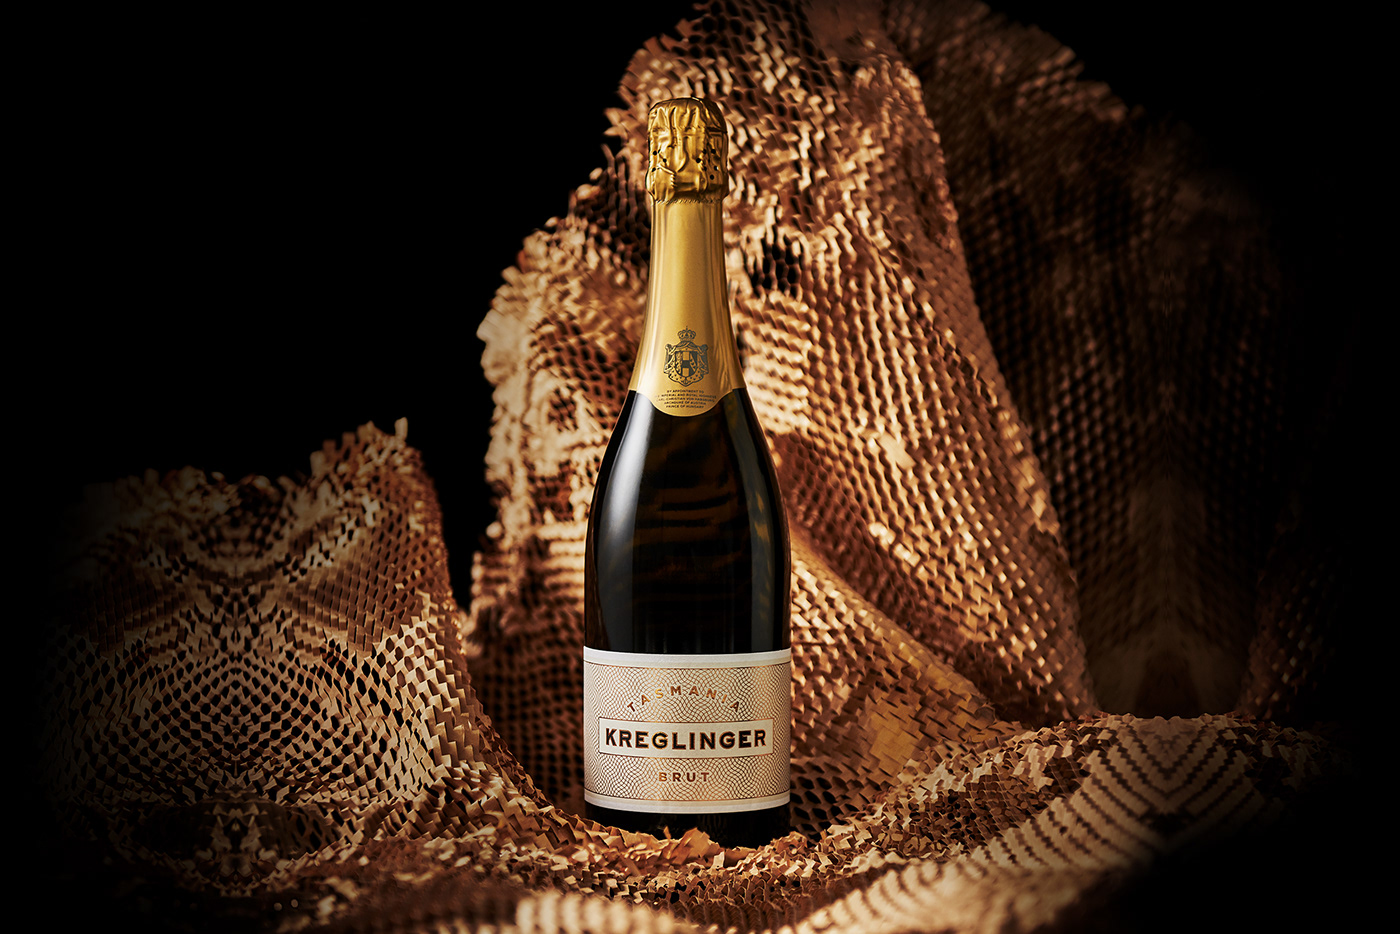 australian design design Harcus harcus design kreglinger Label tasmanian wine wine label packaging design sparkling